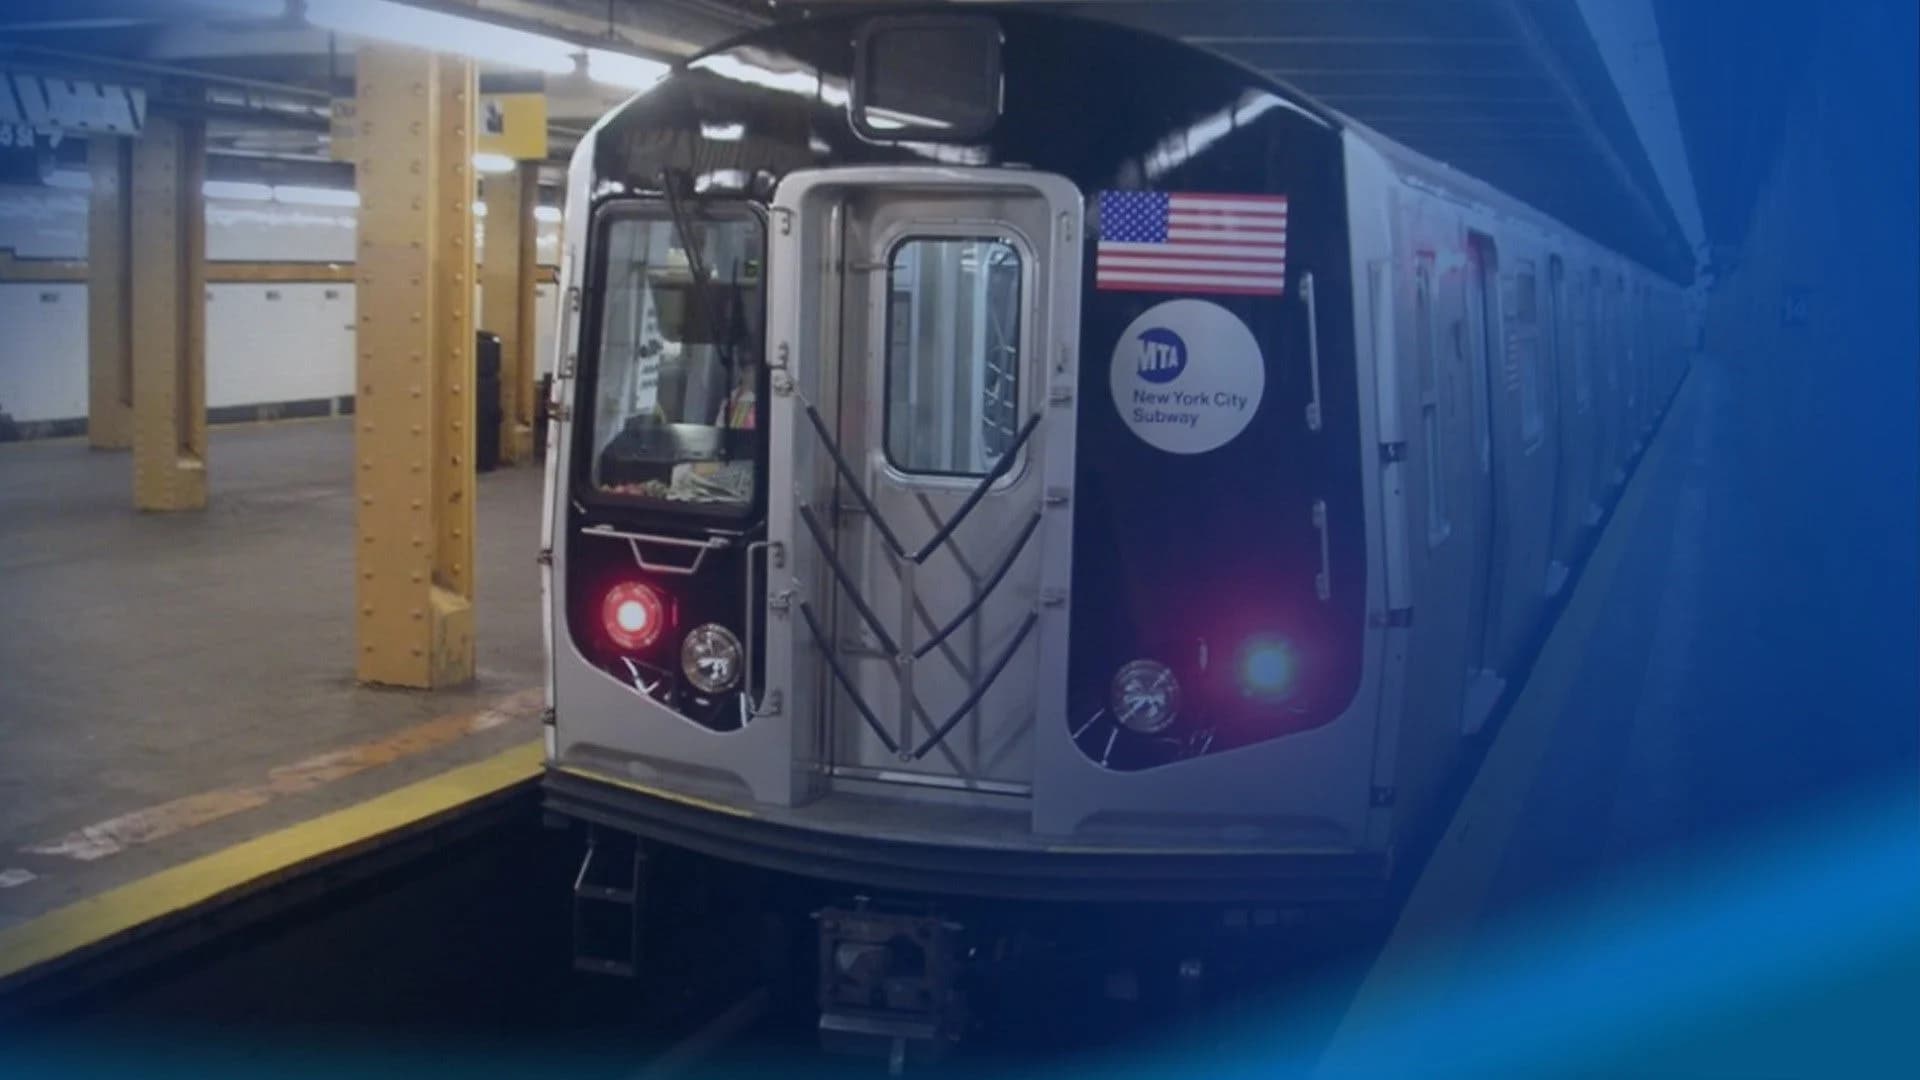 Police: Man shoves woman onto subway tracks, takes off